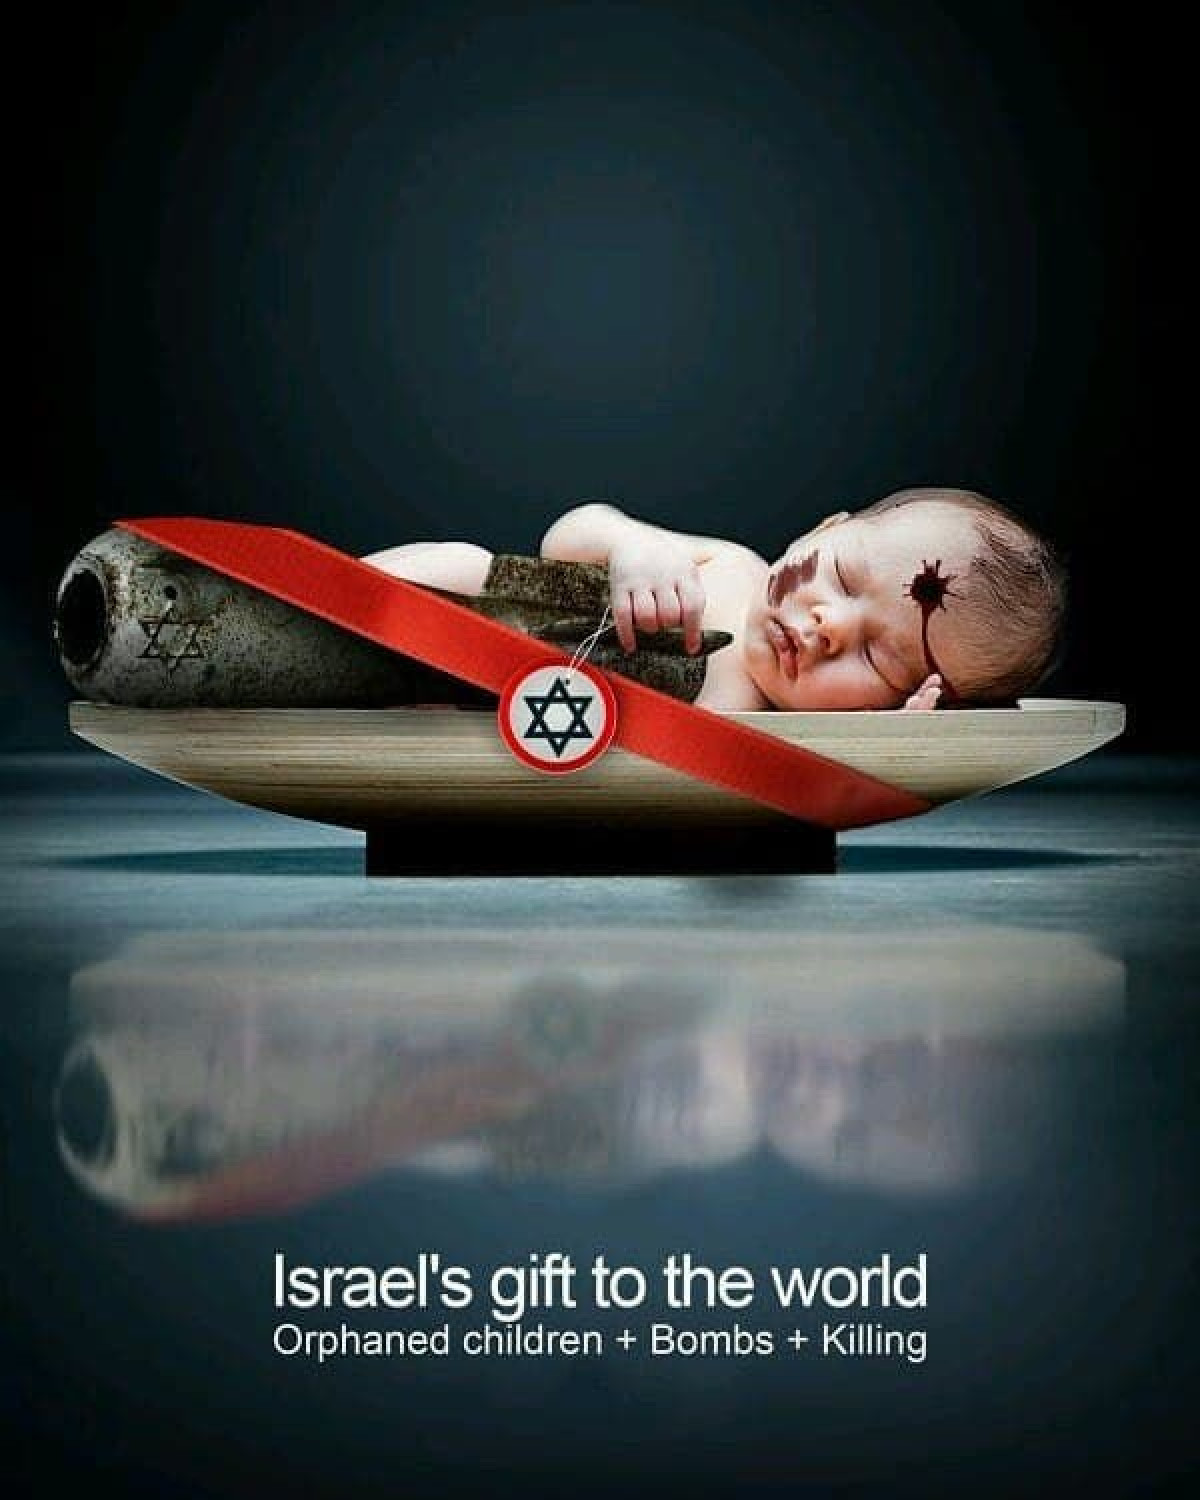 Israel is war criminal